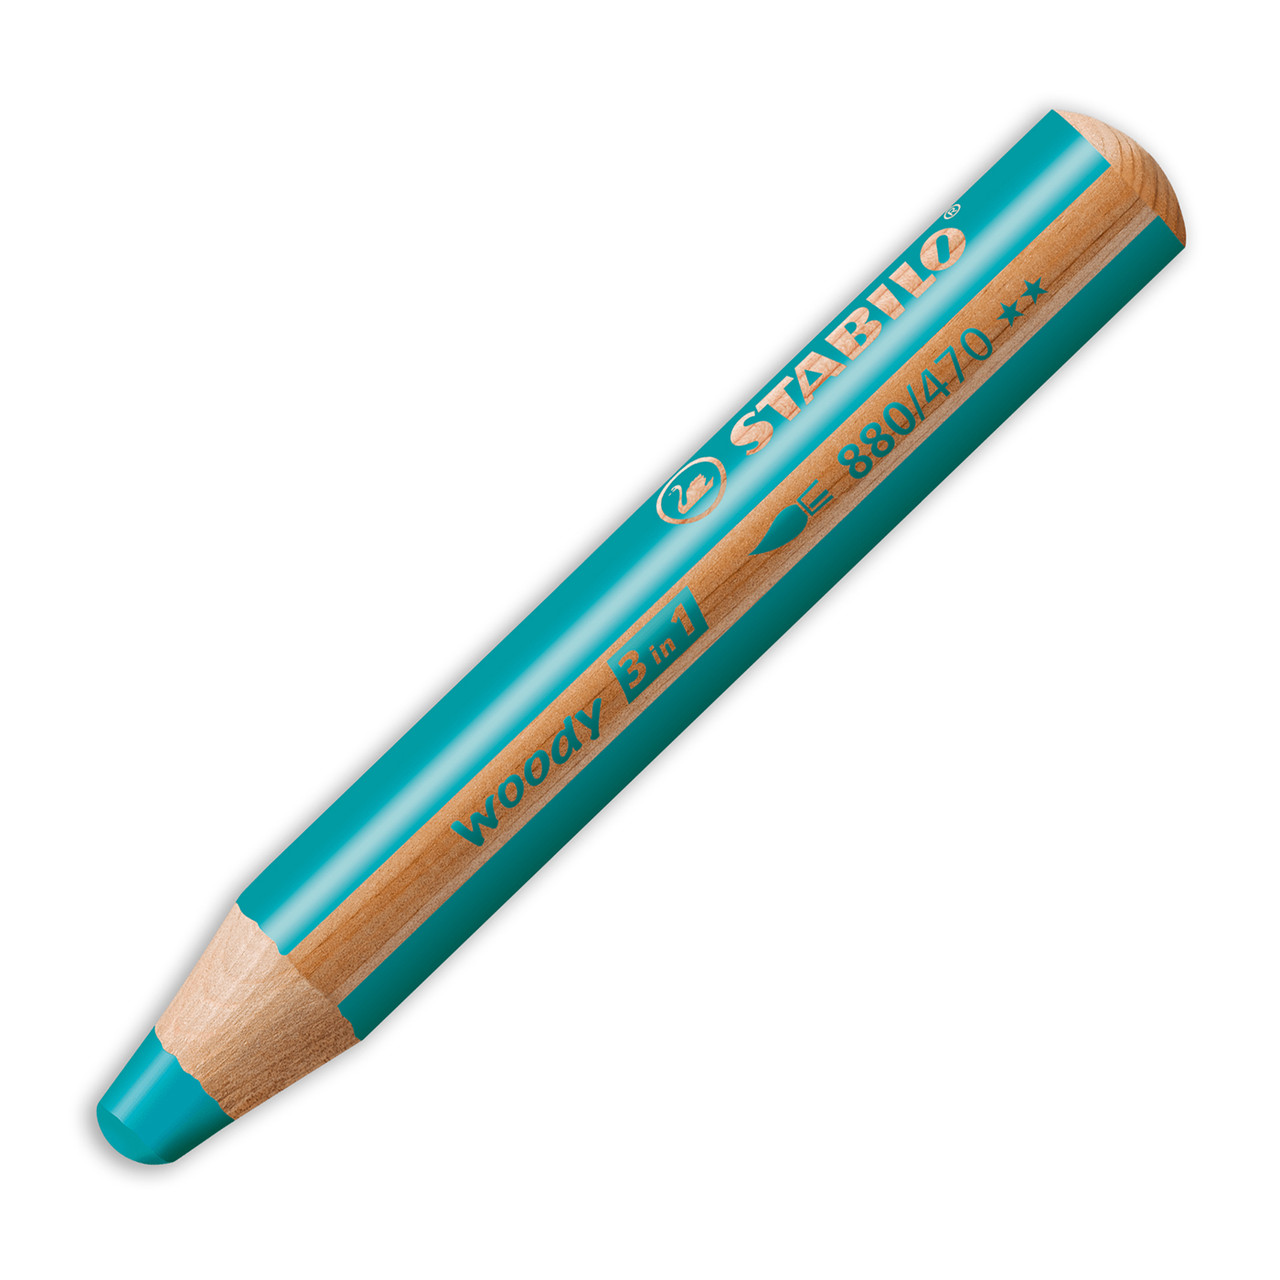 STABILO Woody 3-in-1 Pencil